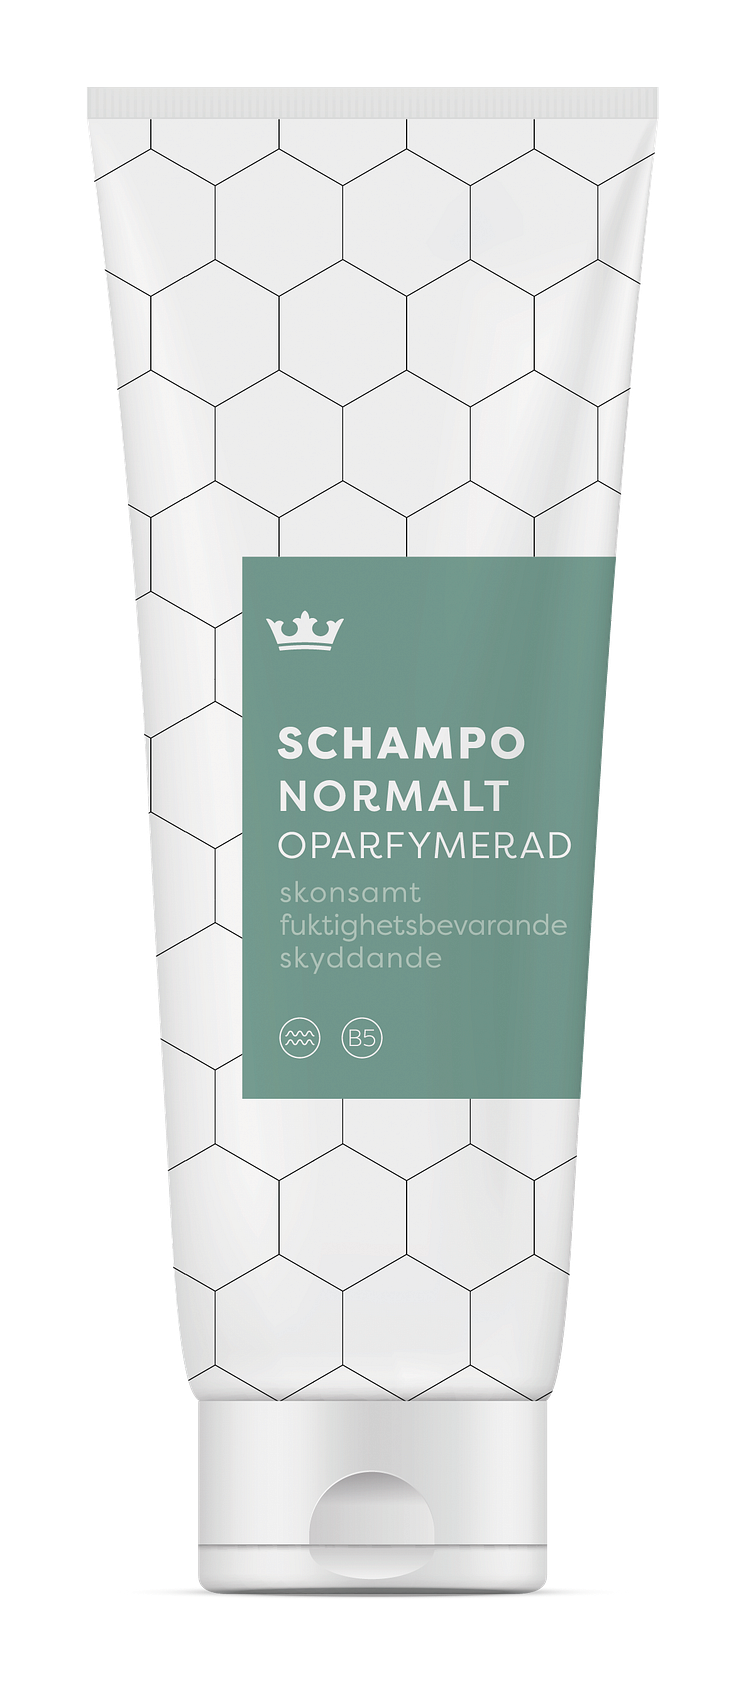 Kronan_Schampo Normal OPARF